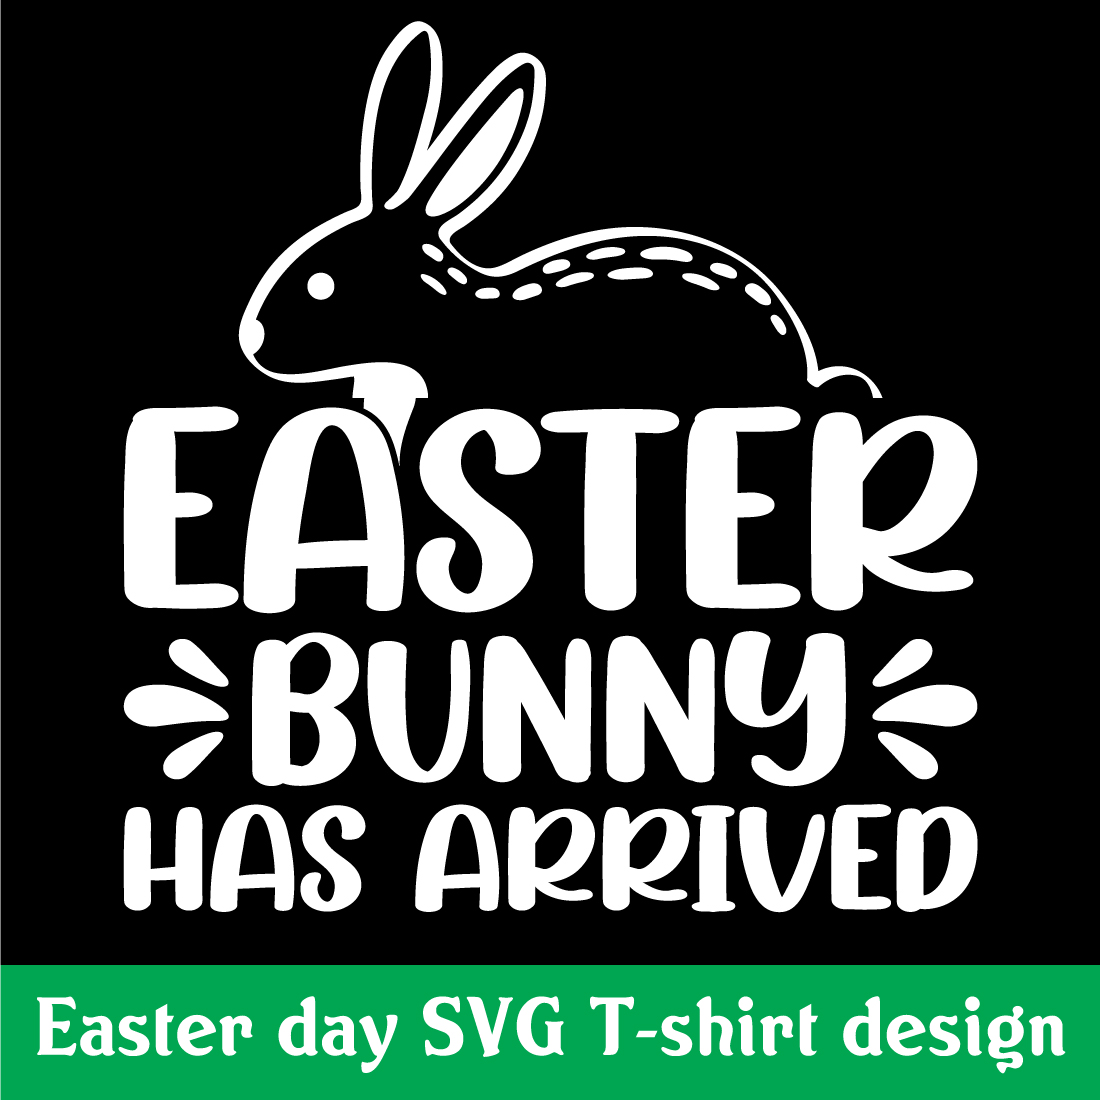 Easter bunny has arrived SVG T-shirt design preview image.